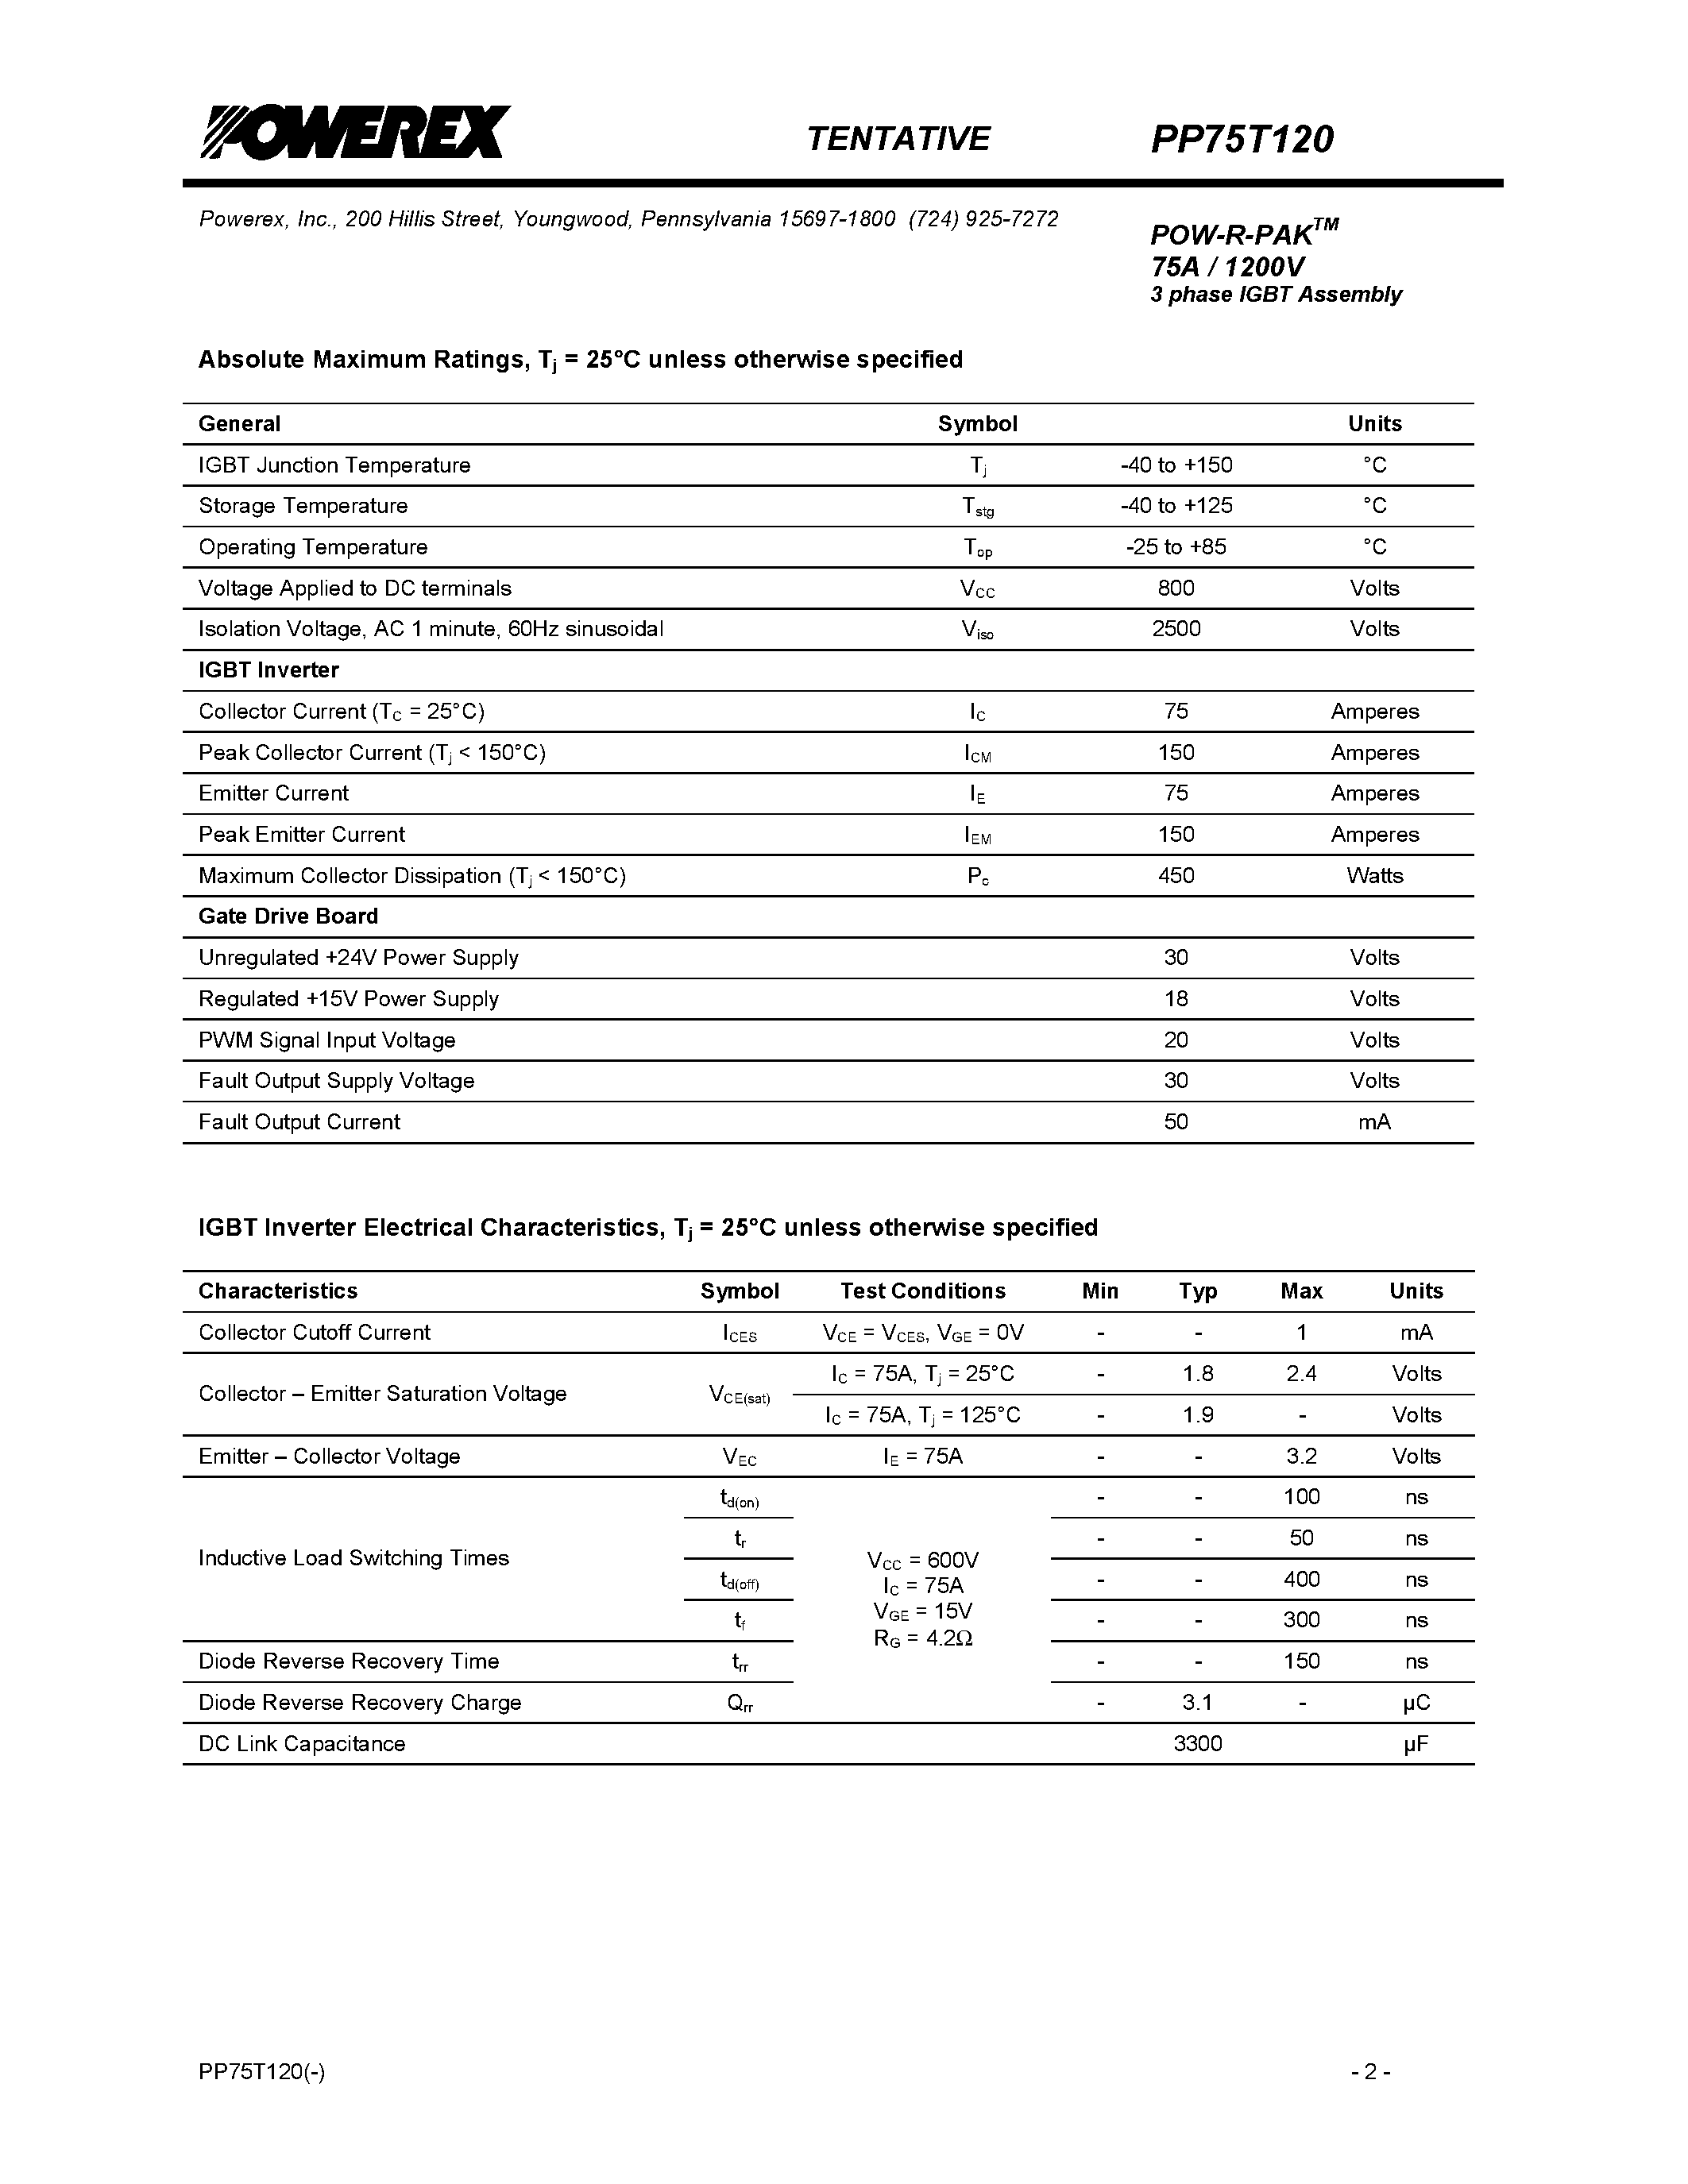 Datasheet PP75T120 - POW-R-PAK 75A / 1200V 3 phase IGBT Assembly page 2